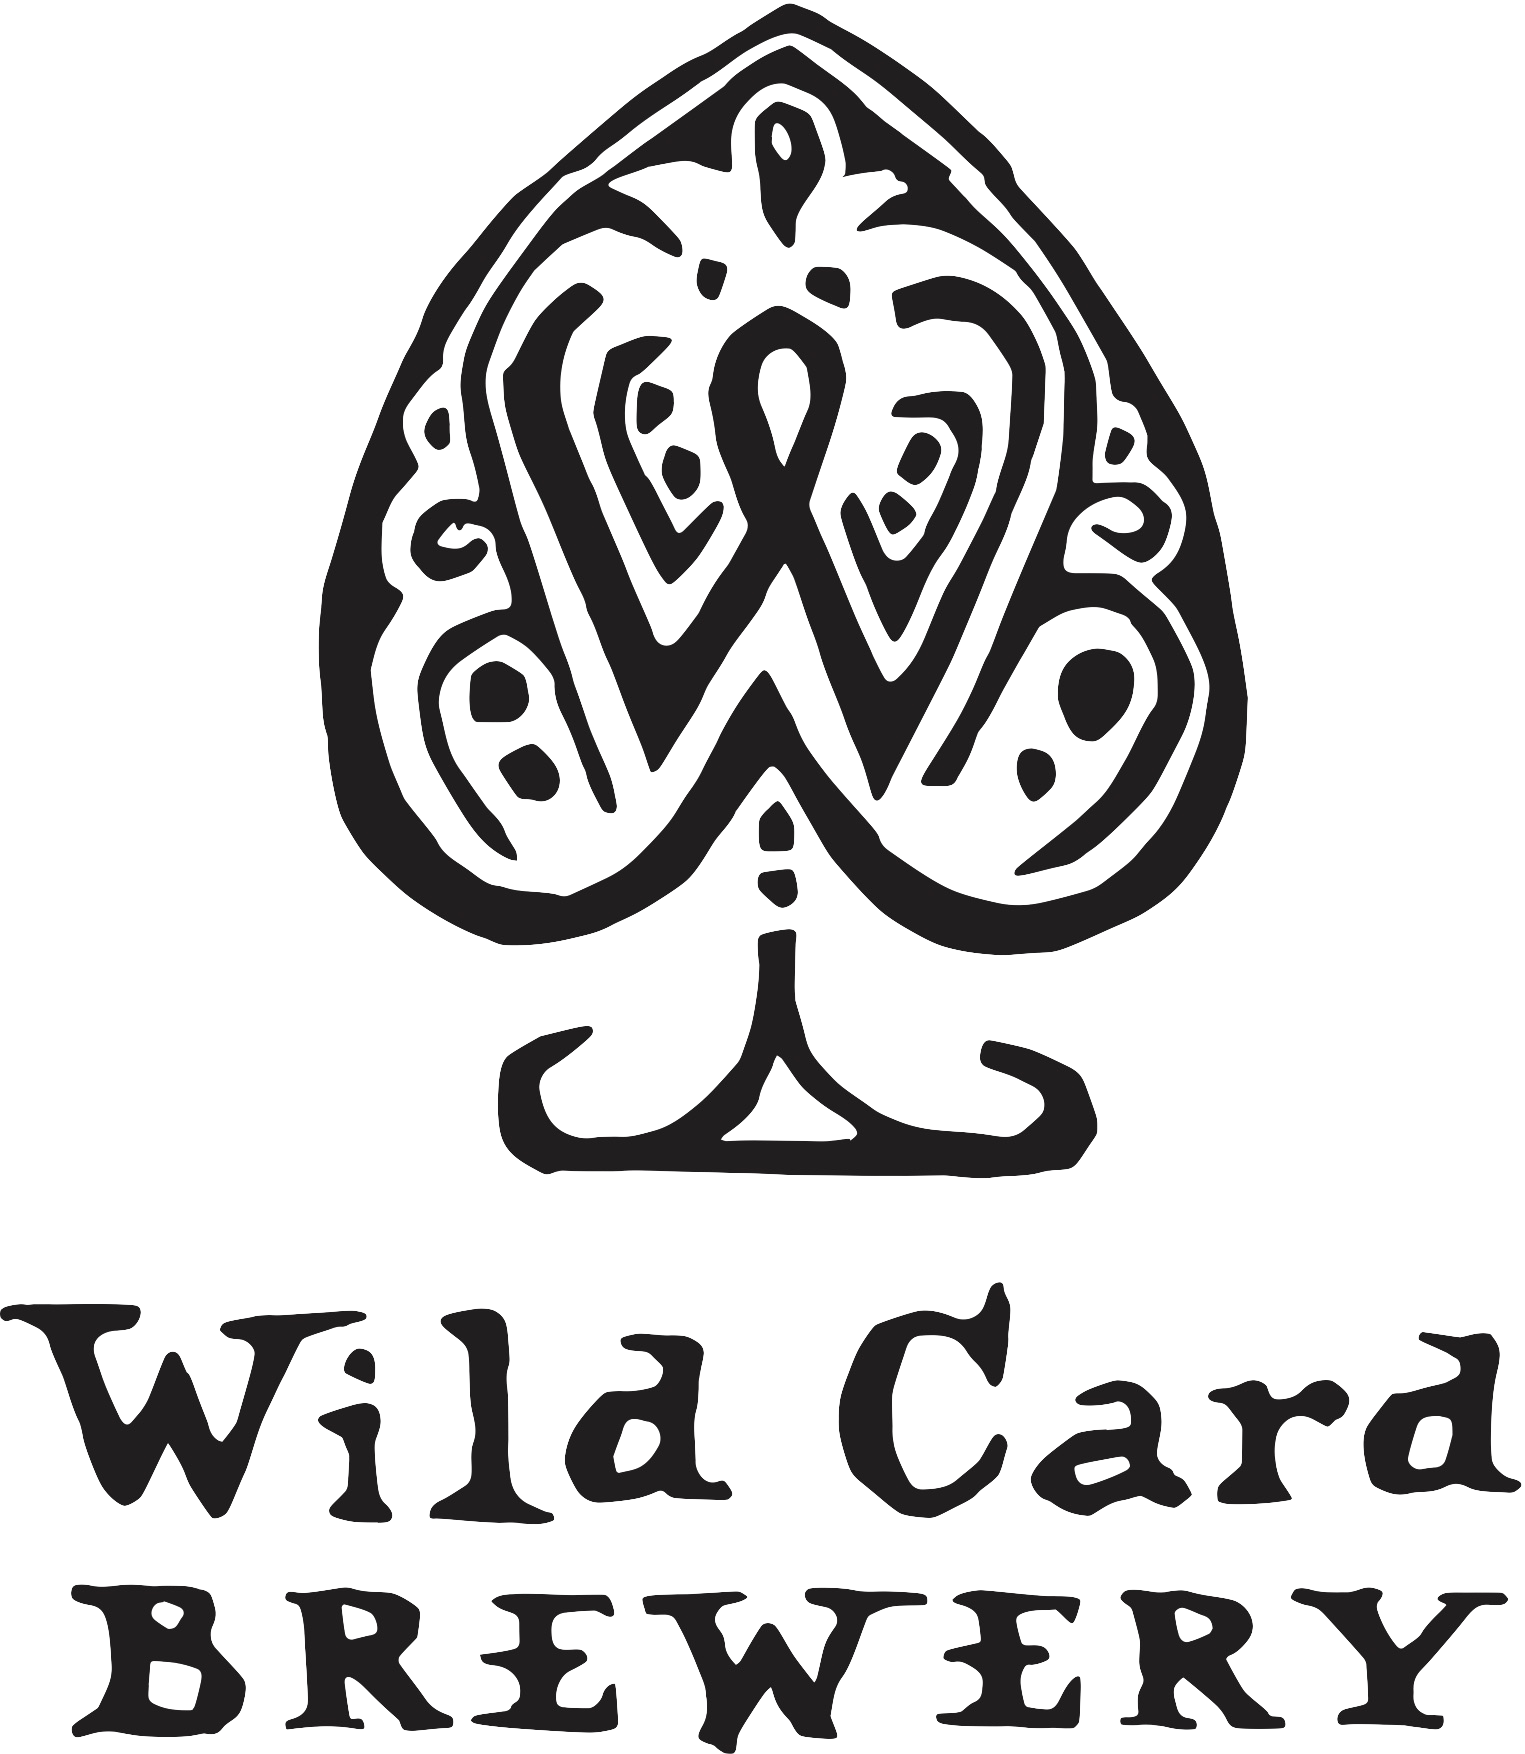 Wild Card Brewery